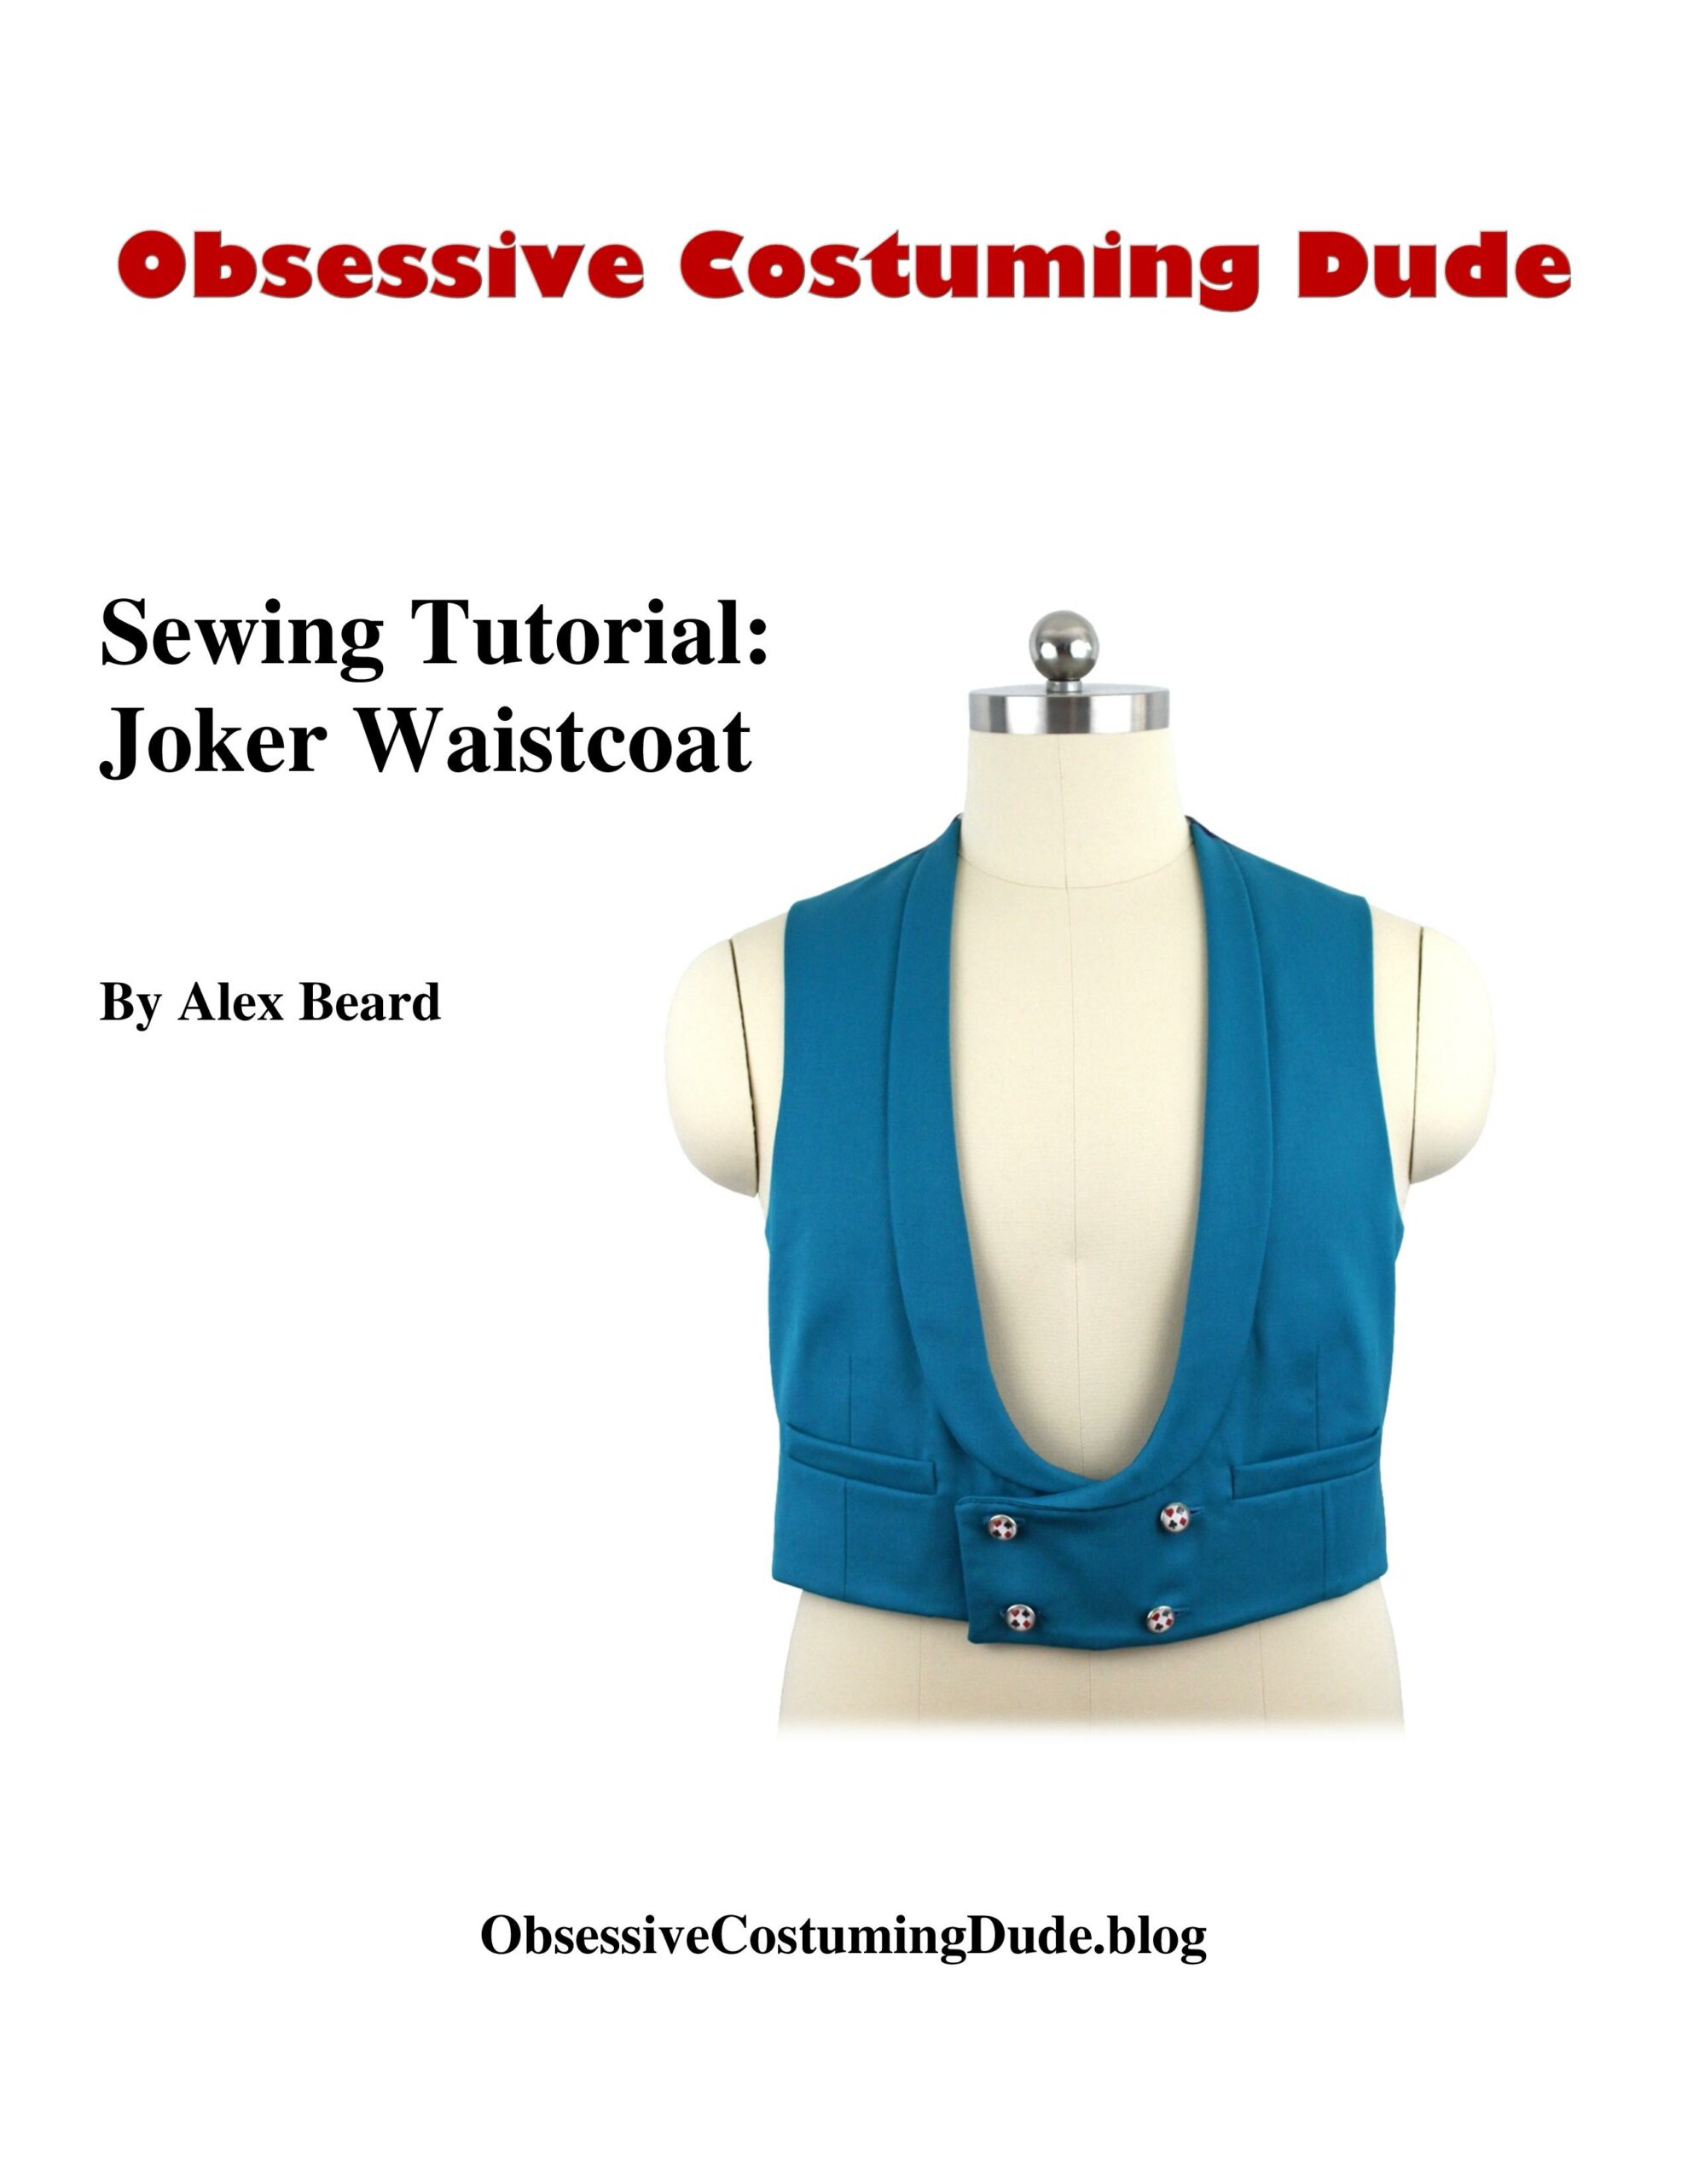 Joker waistcoat sewing tutorial - Obsessive Costuming Dude